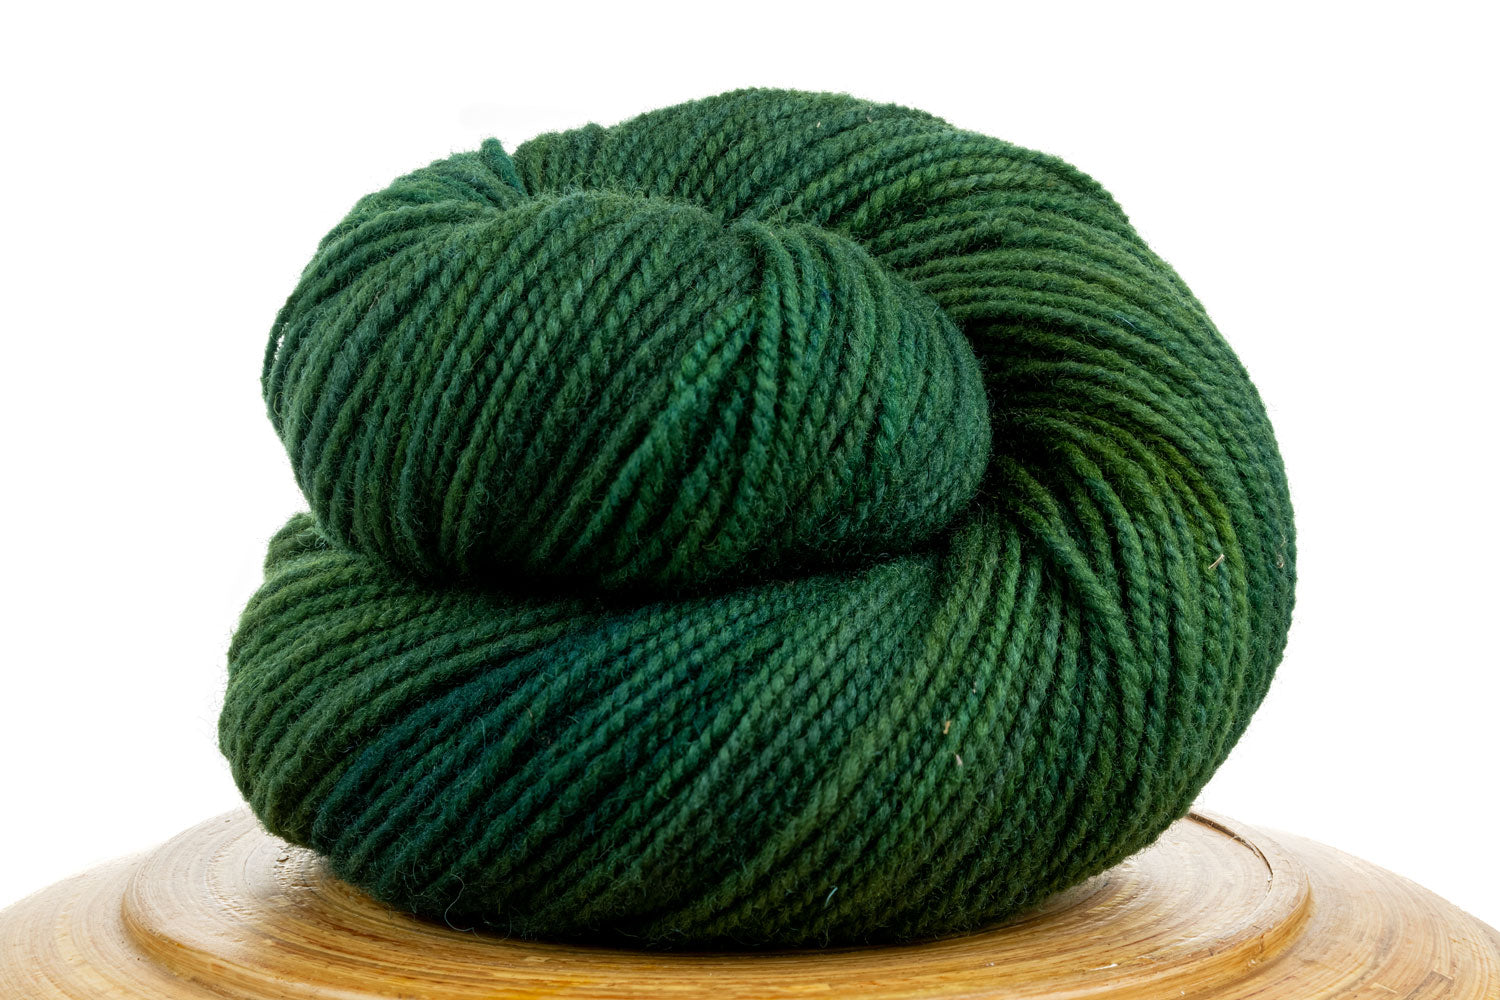 Winfield Canadian hand-dyed yarn in Hinterlands, a dark green